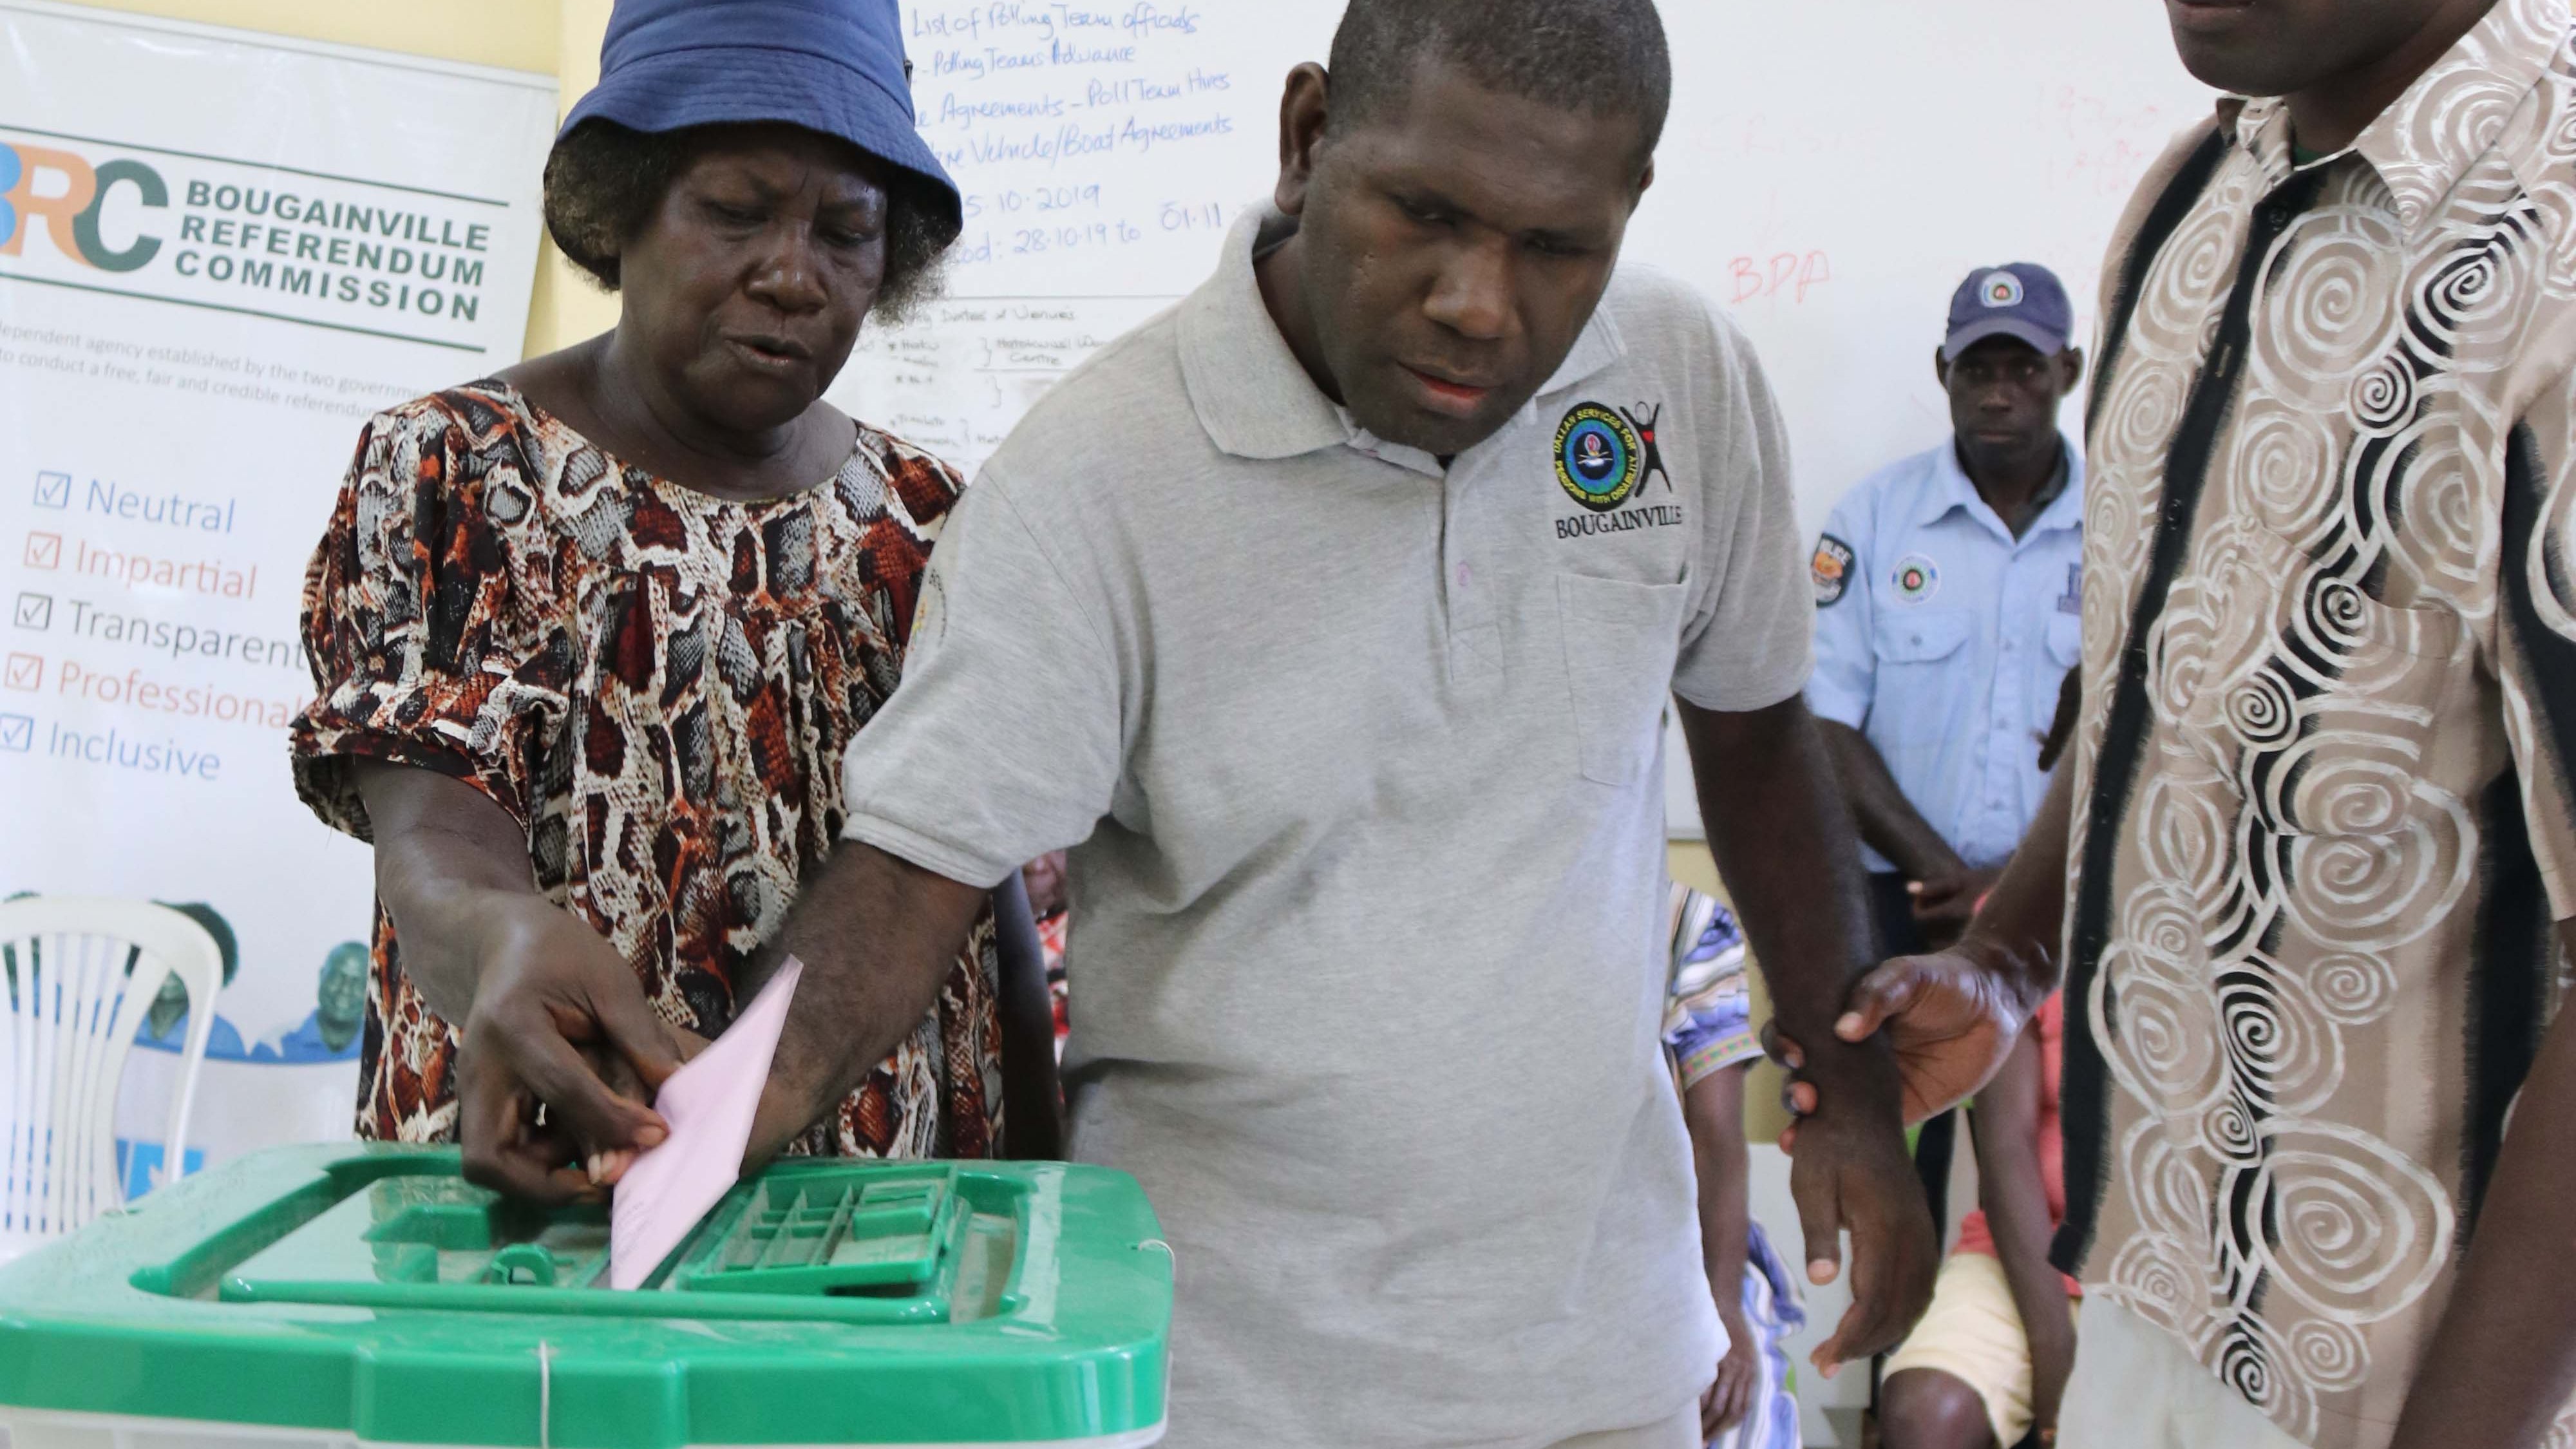 Aplastante victoria independentista en el referéndum de Bougainville